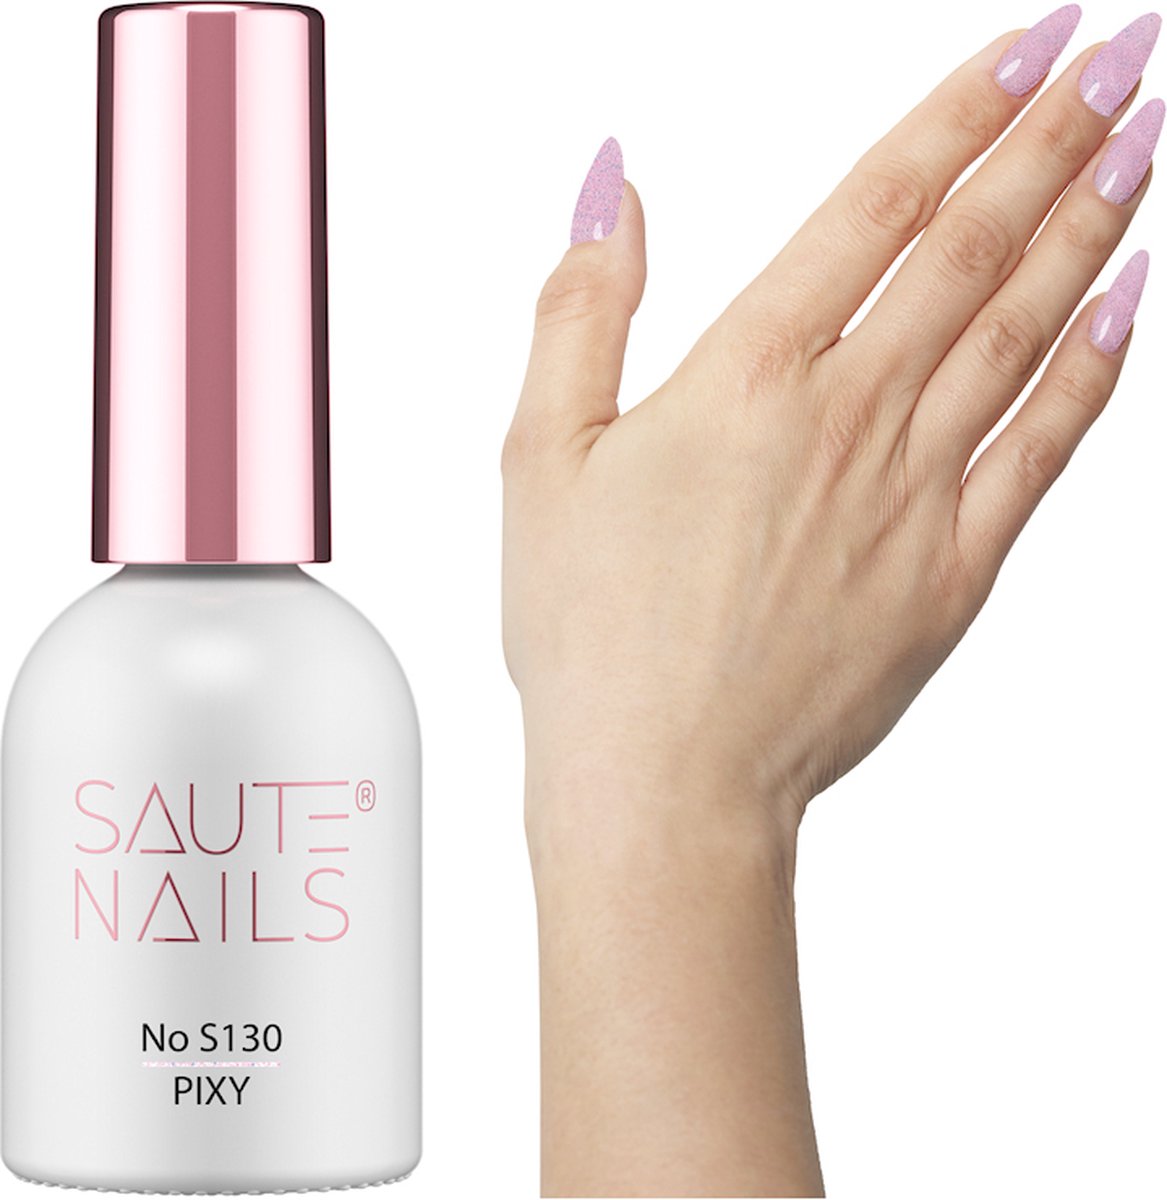 SAUTE Nails Roze/Gekleurde Glitter UV/LED Gellak 8ml. - S130 Pixy